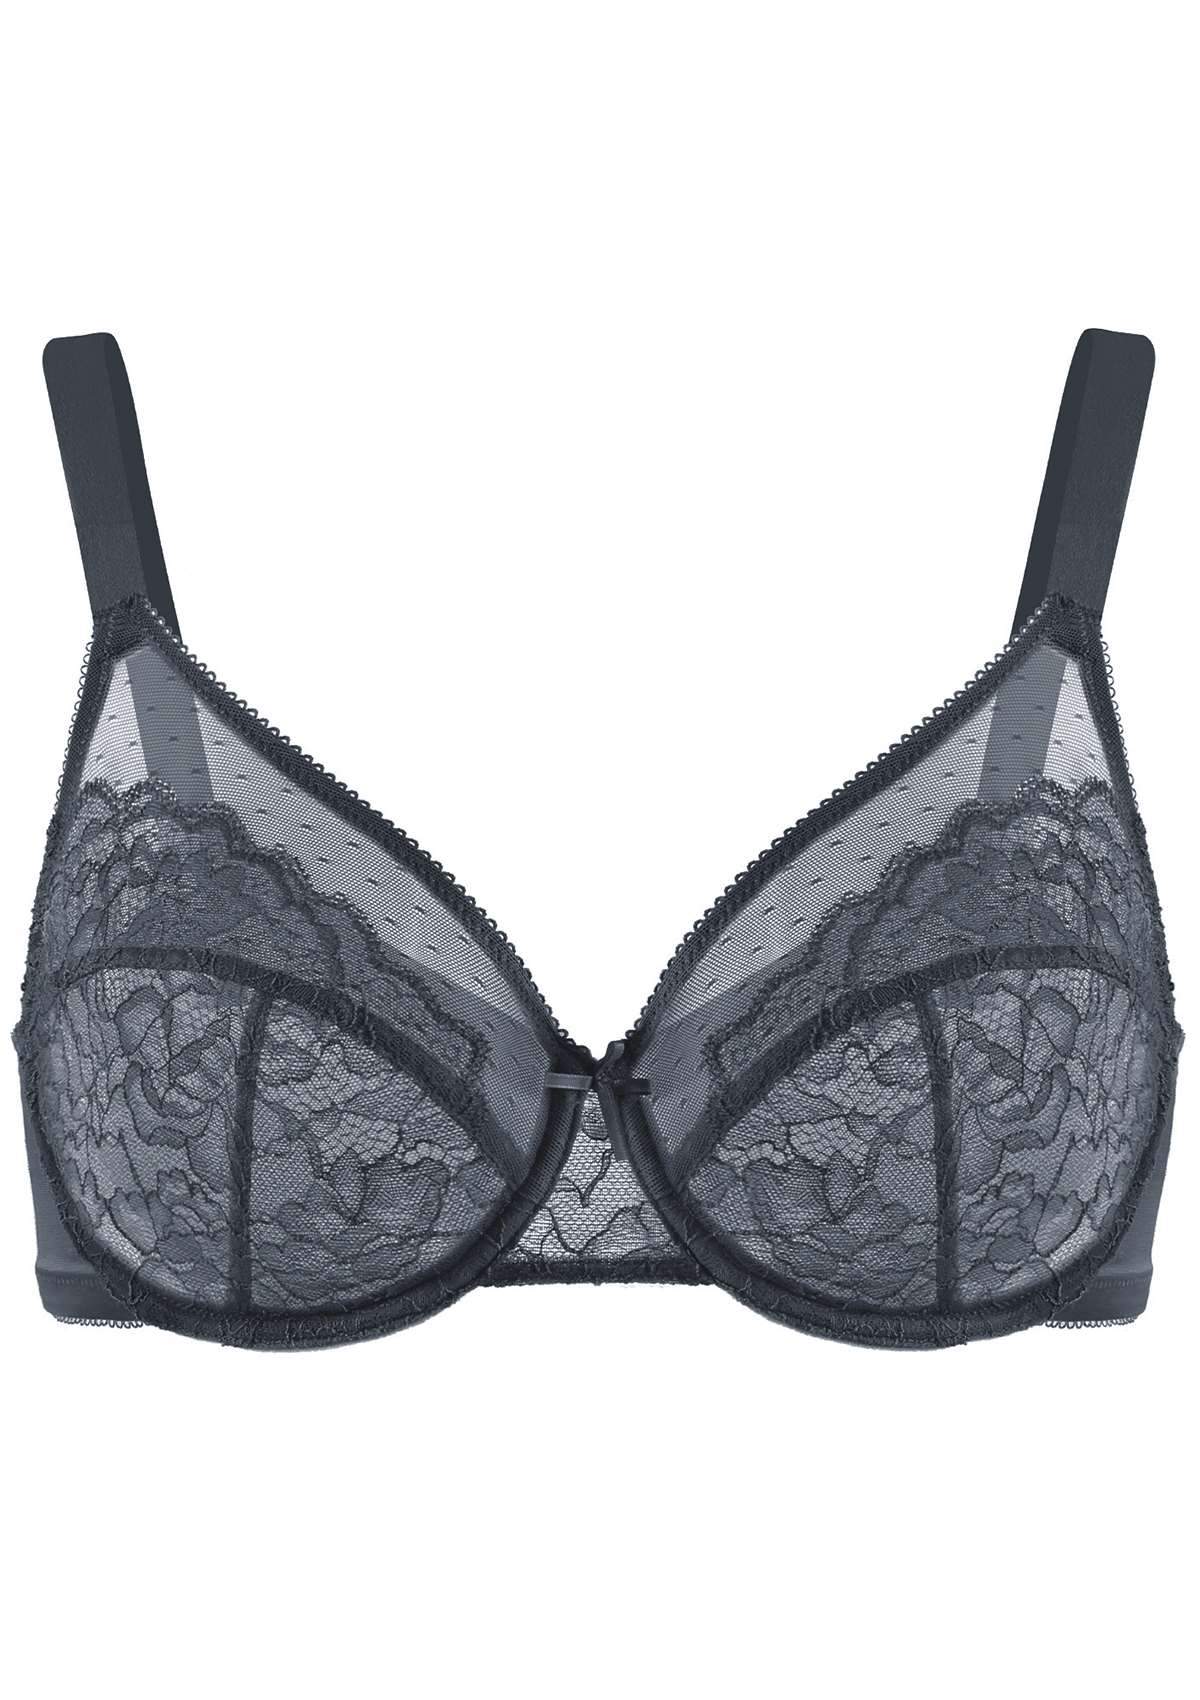 HSIA Enchante Matching Bra And Underwear Sets: Uplift Big Boobs Bra - Dark Gray / 34 / DD/E